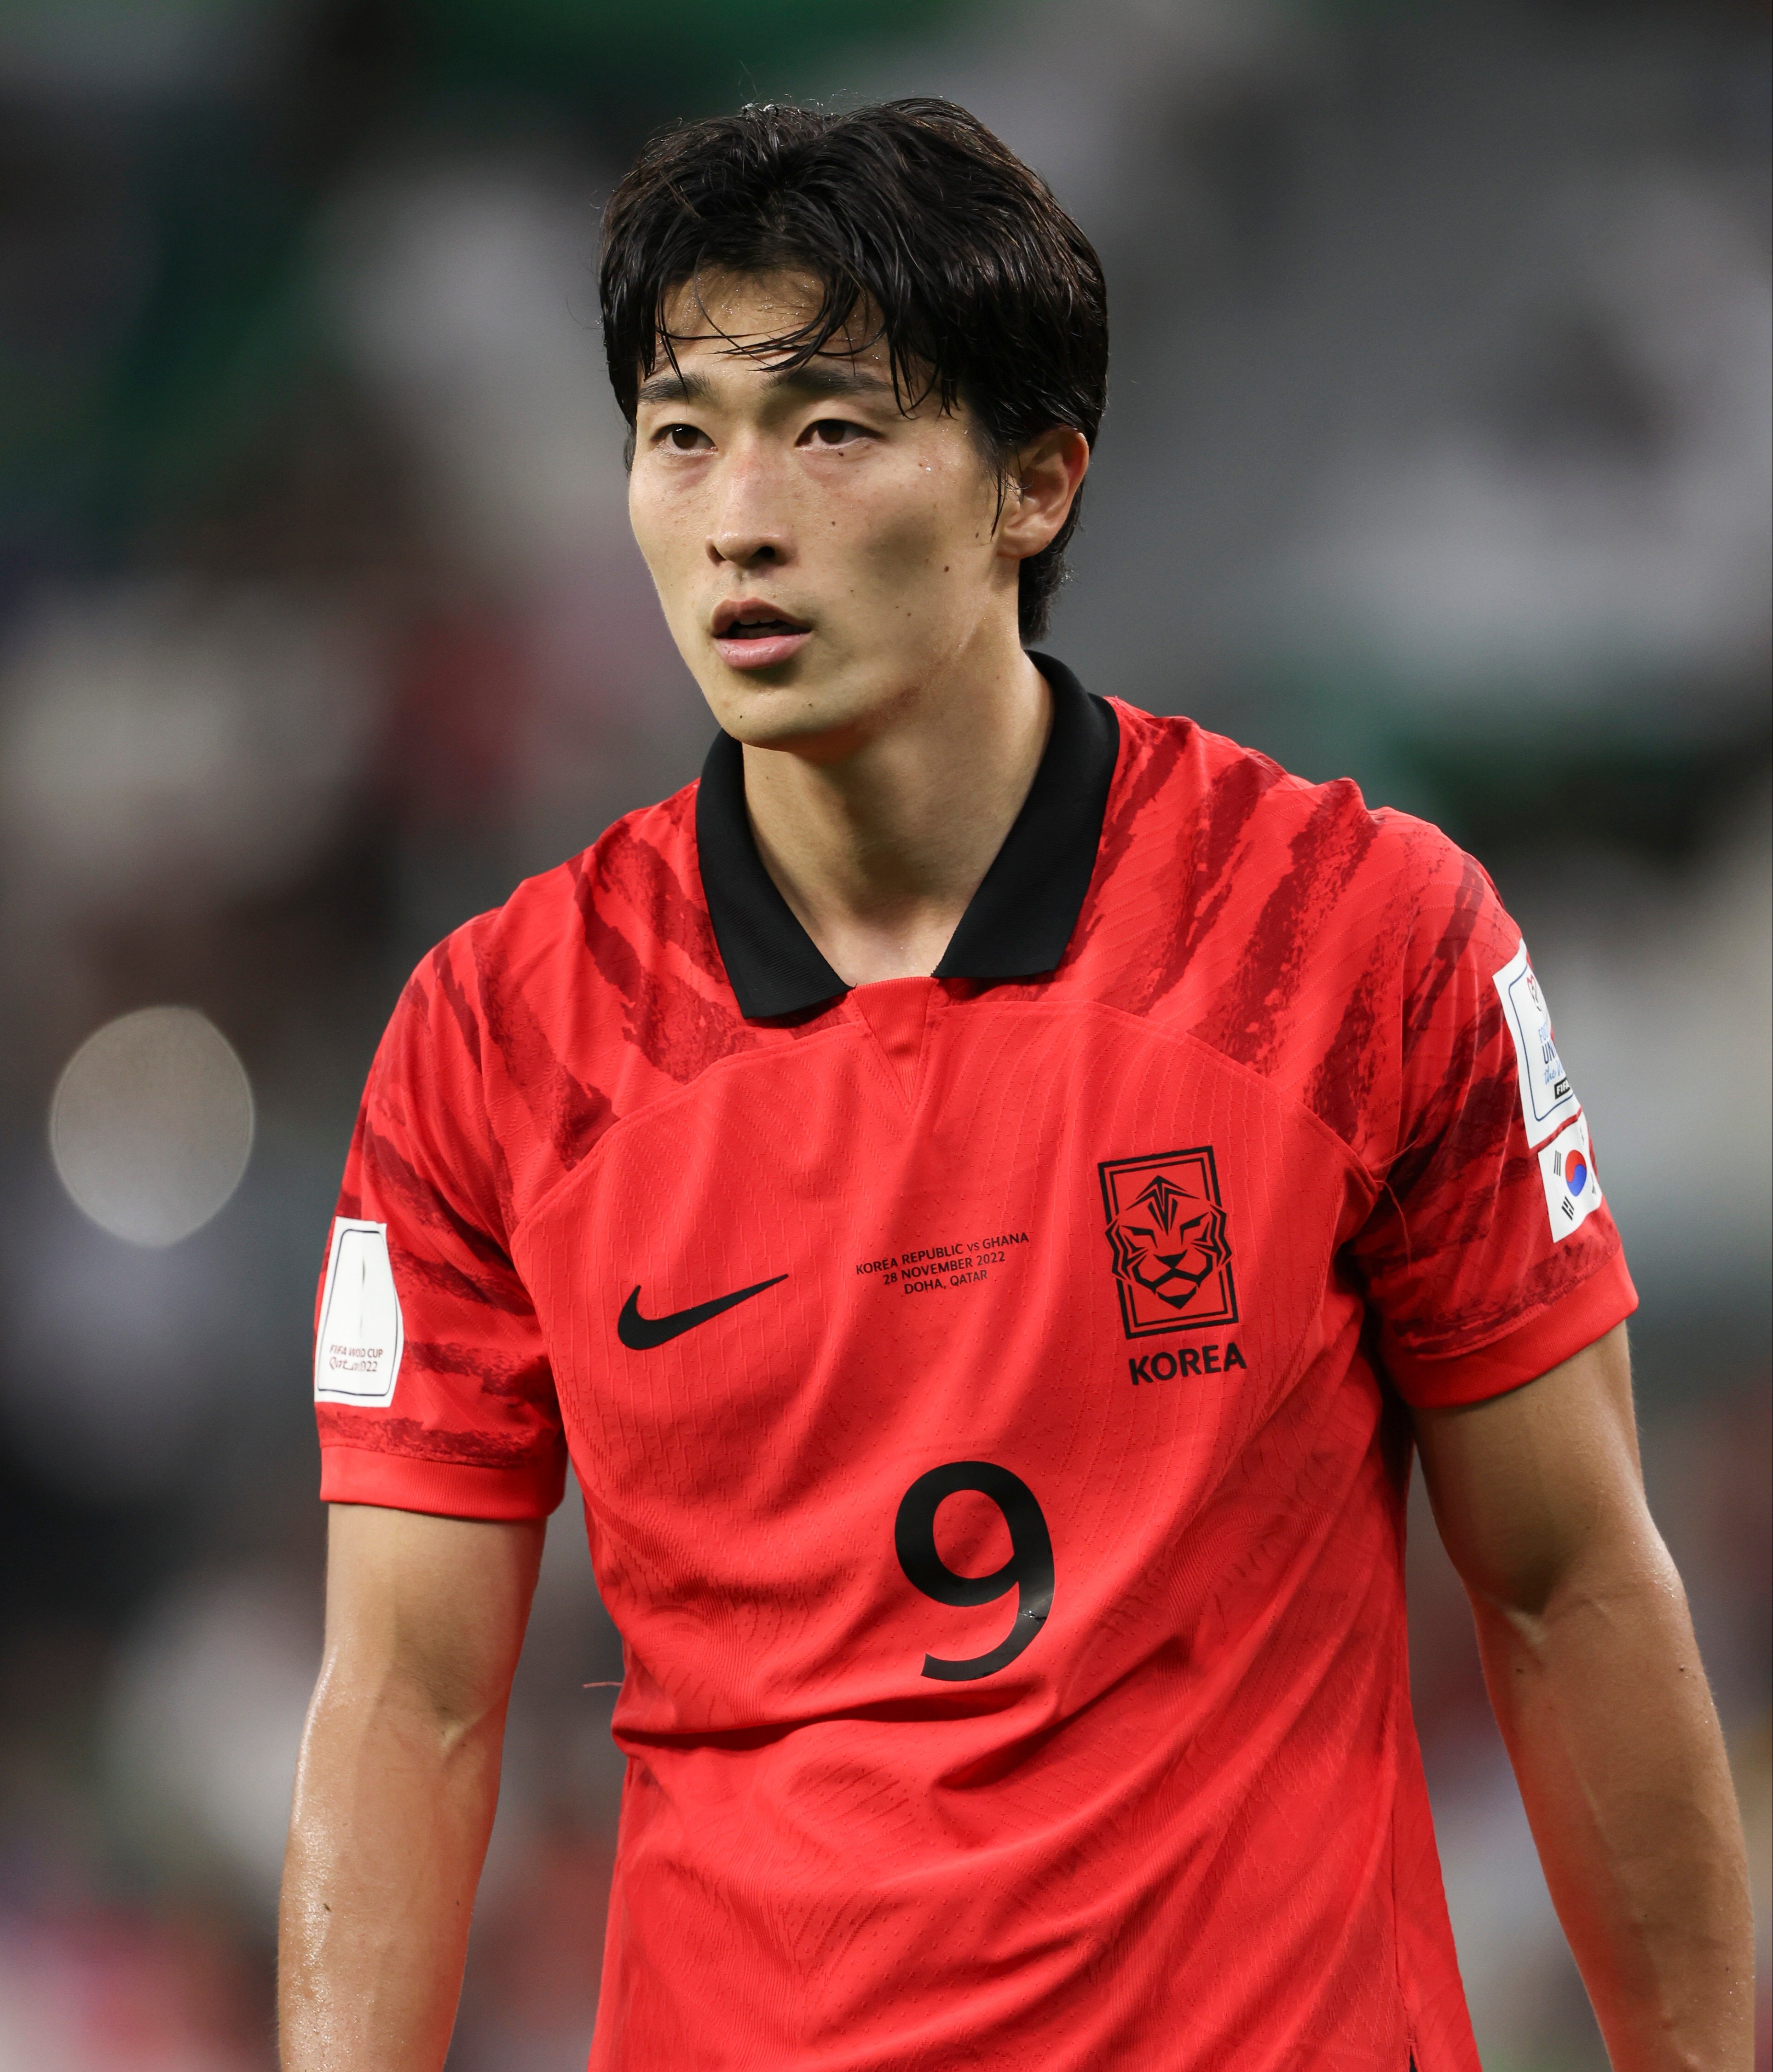 Korea No 9 Meet Cho Guesung 4 facts about the viral Korean footballer  you should know